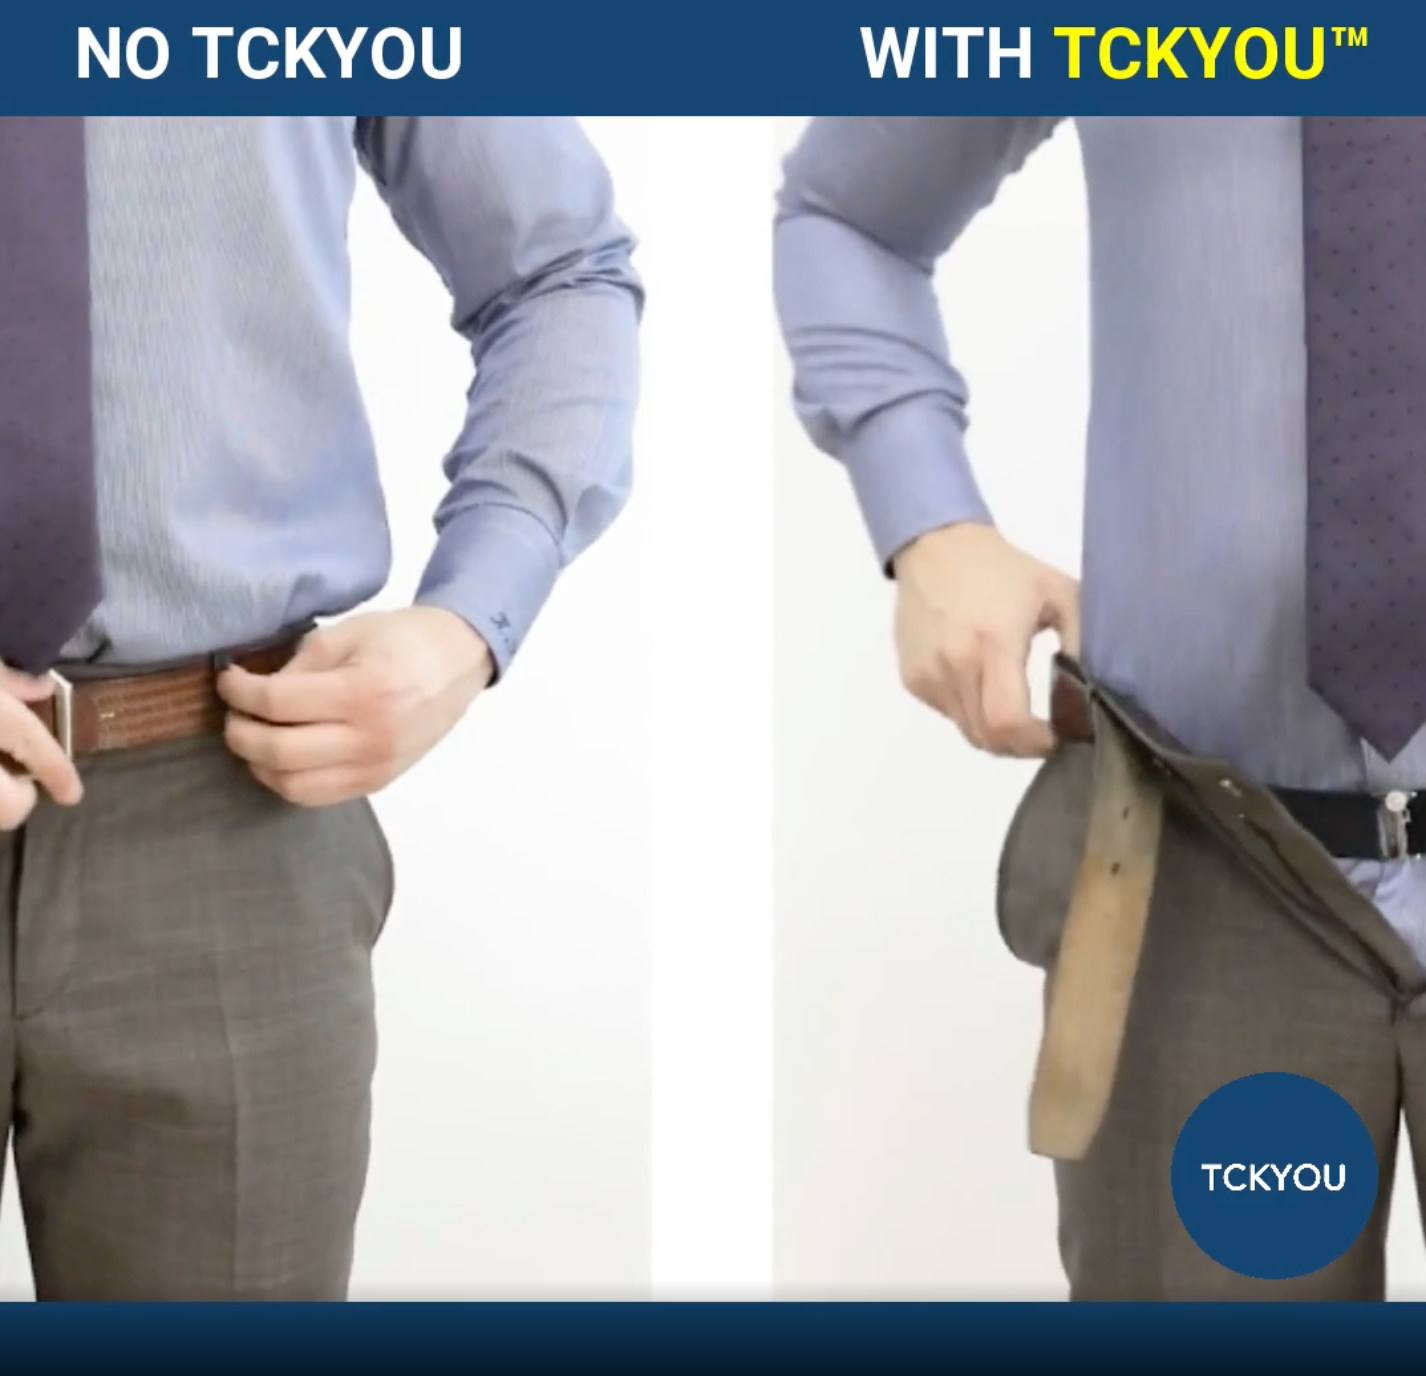 TCKYOU™ SHIRT STAYS BELT - TCKYOU.com | HOW IT WORKS VIDEO DEMO